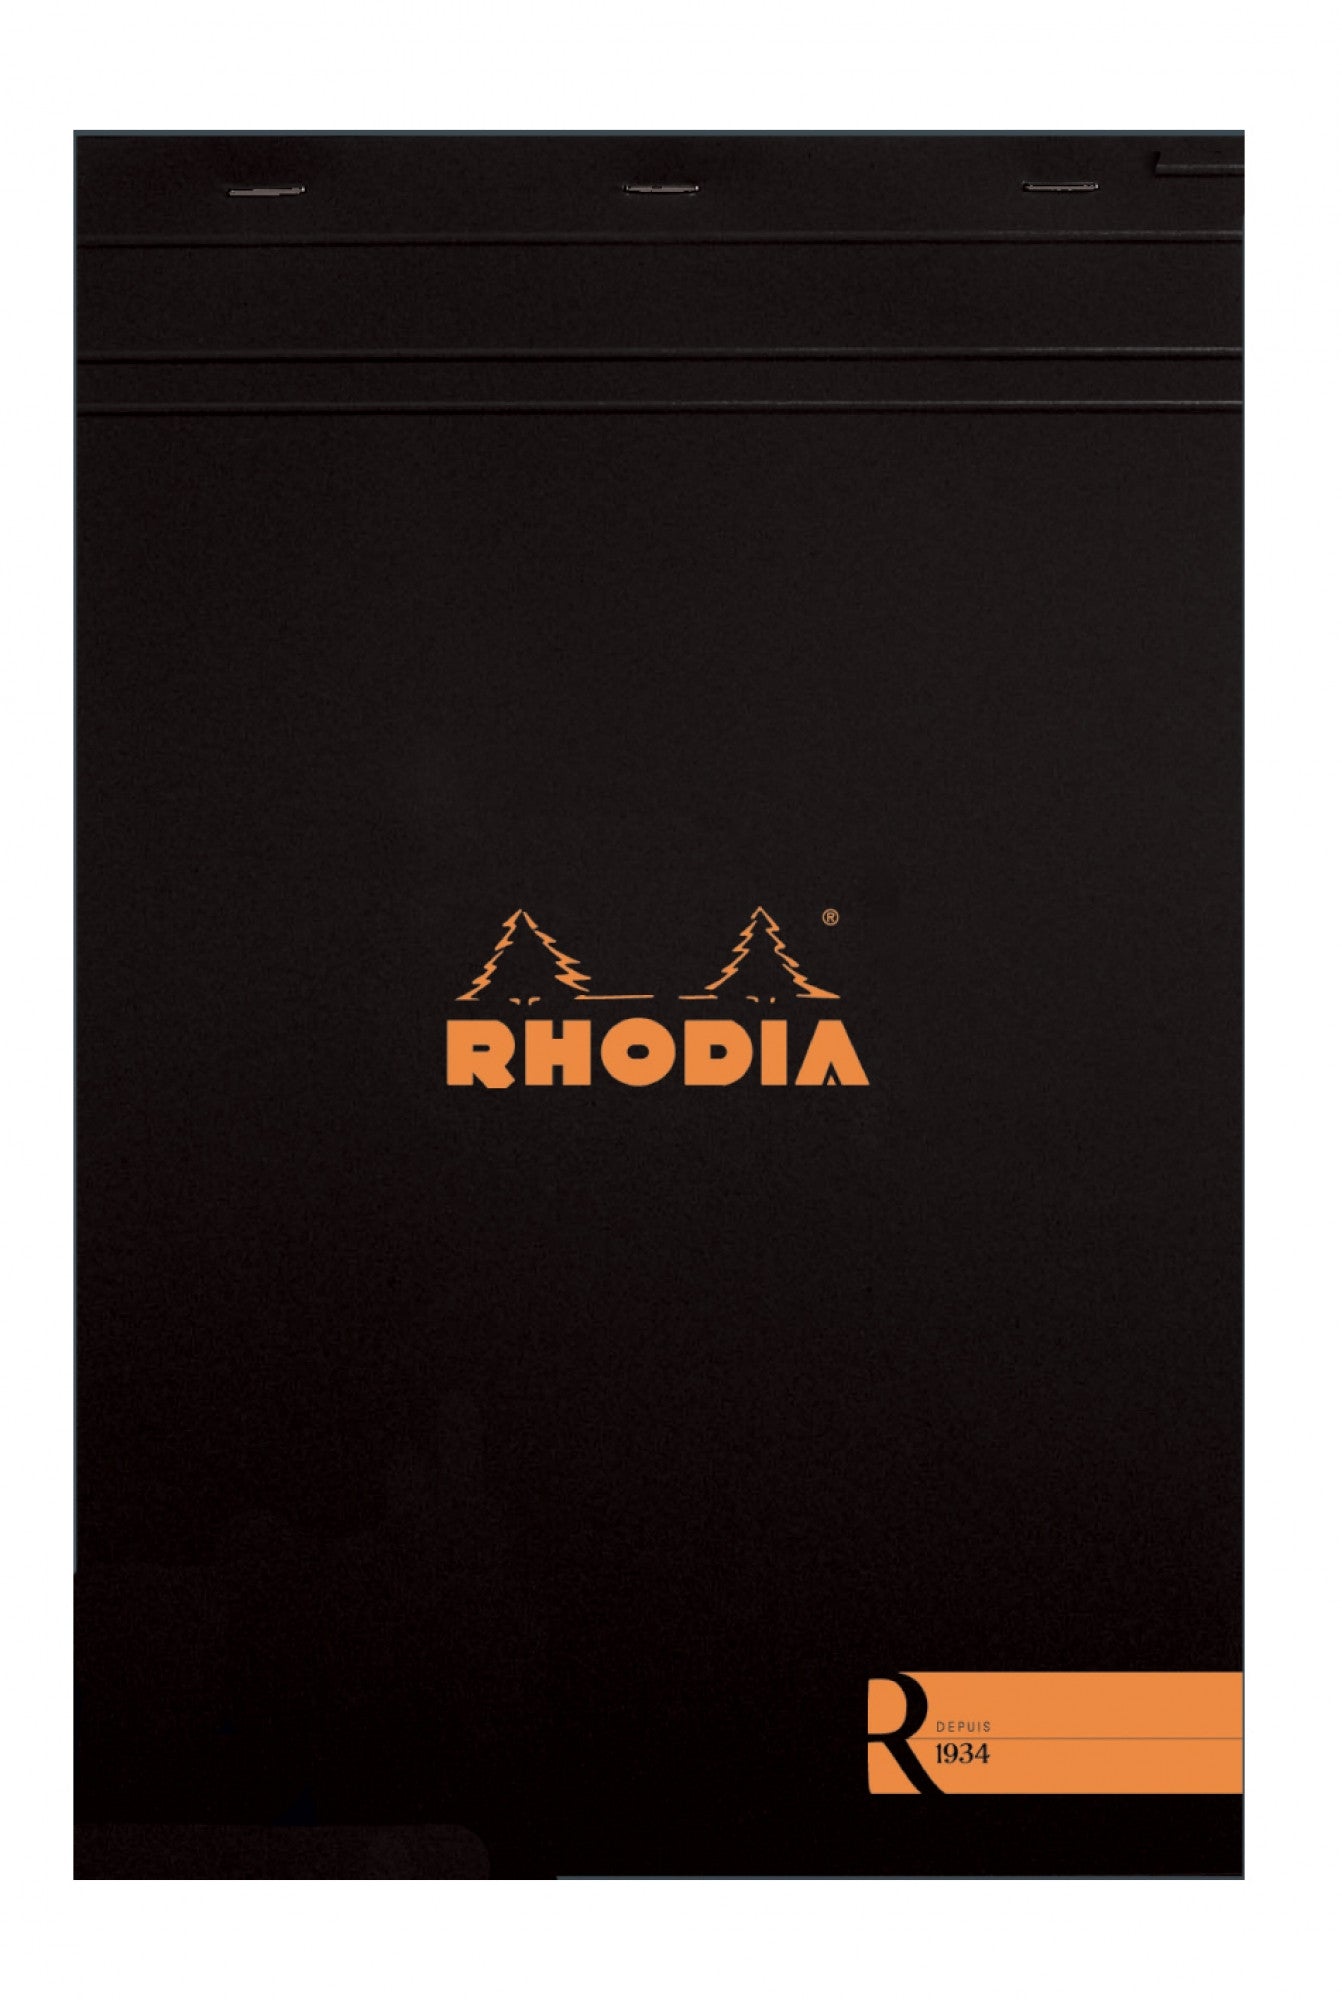 Rhodia R #18 Black